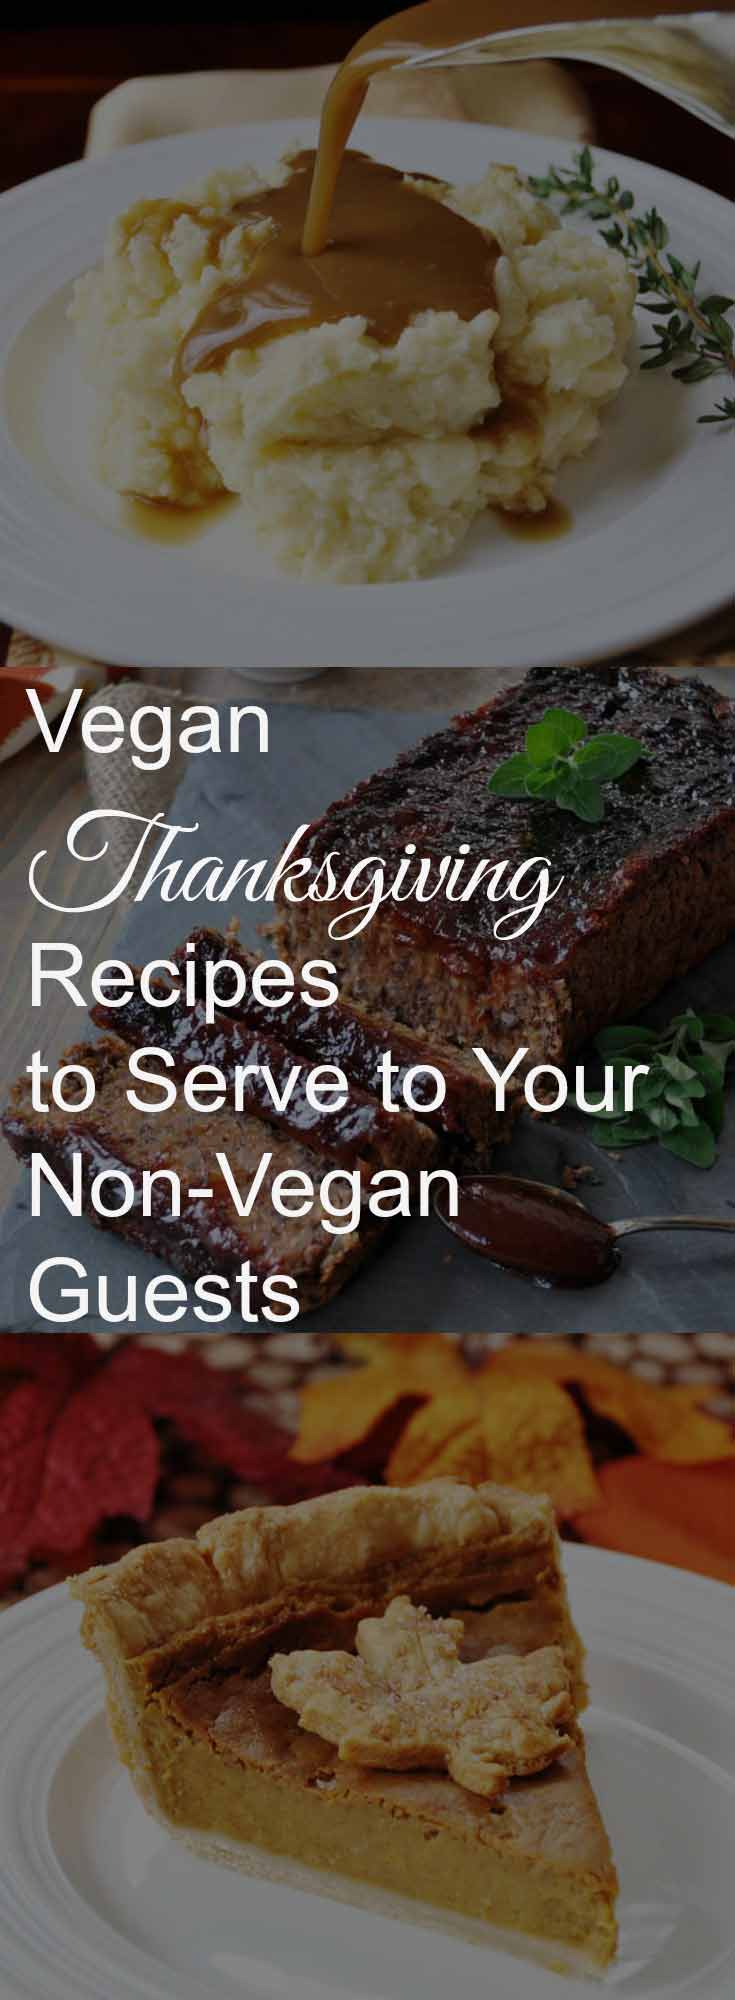 Vegan Thanksgiving recipes that your non-vegan guests will love! www.veganosity.com